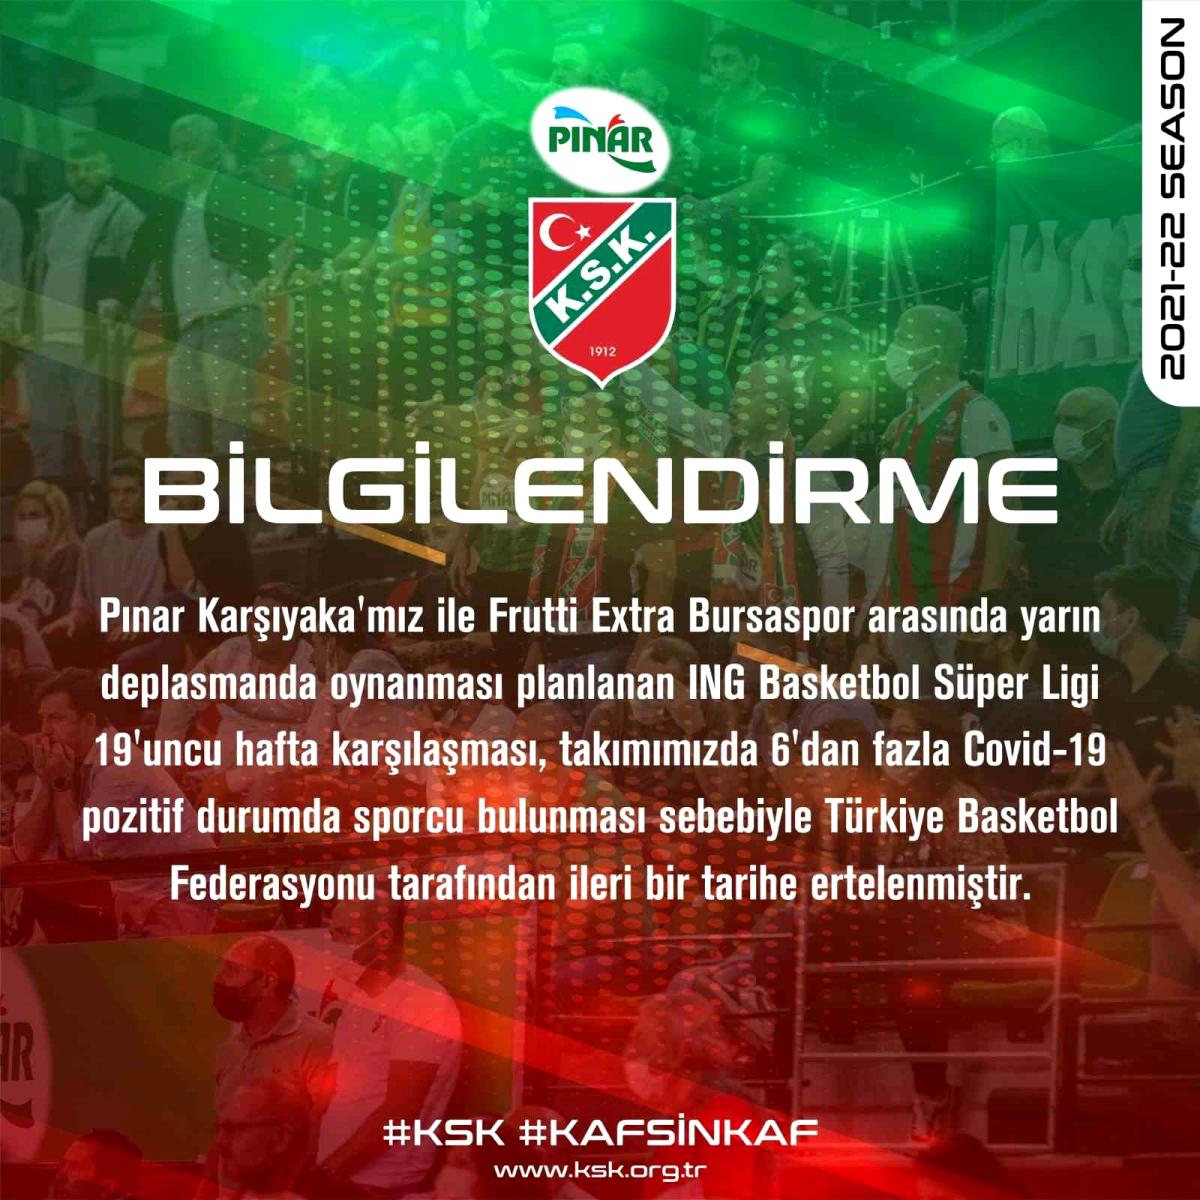 ING Basketbol Süper Ligi nde Pınar Karşıyaka-Frutti Extra Bursaspor maçı ertelendi